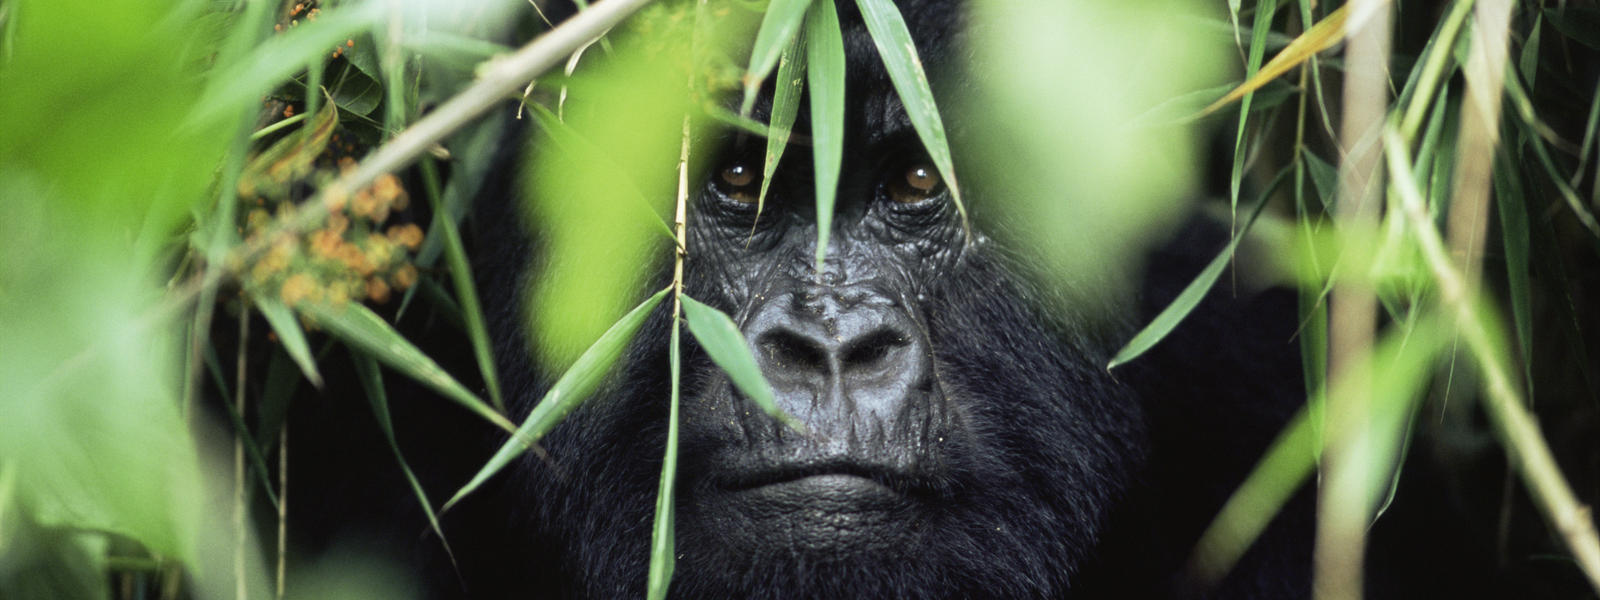 Gorilla tracking Uganda Offers